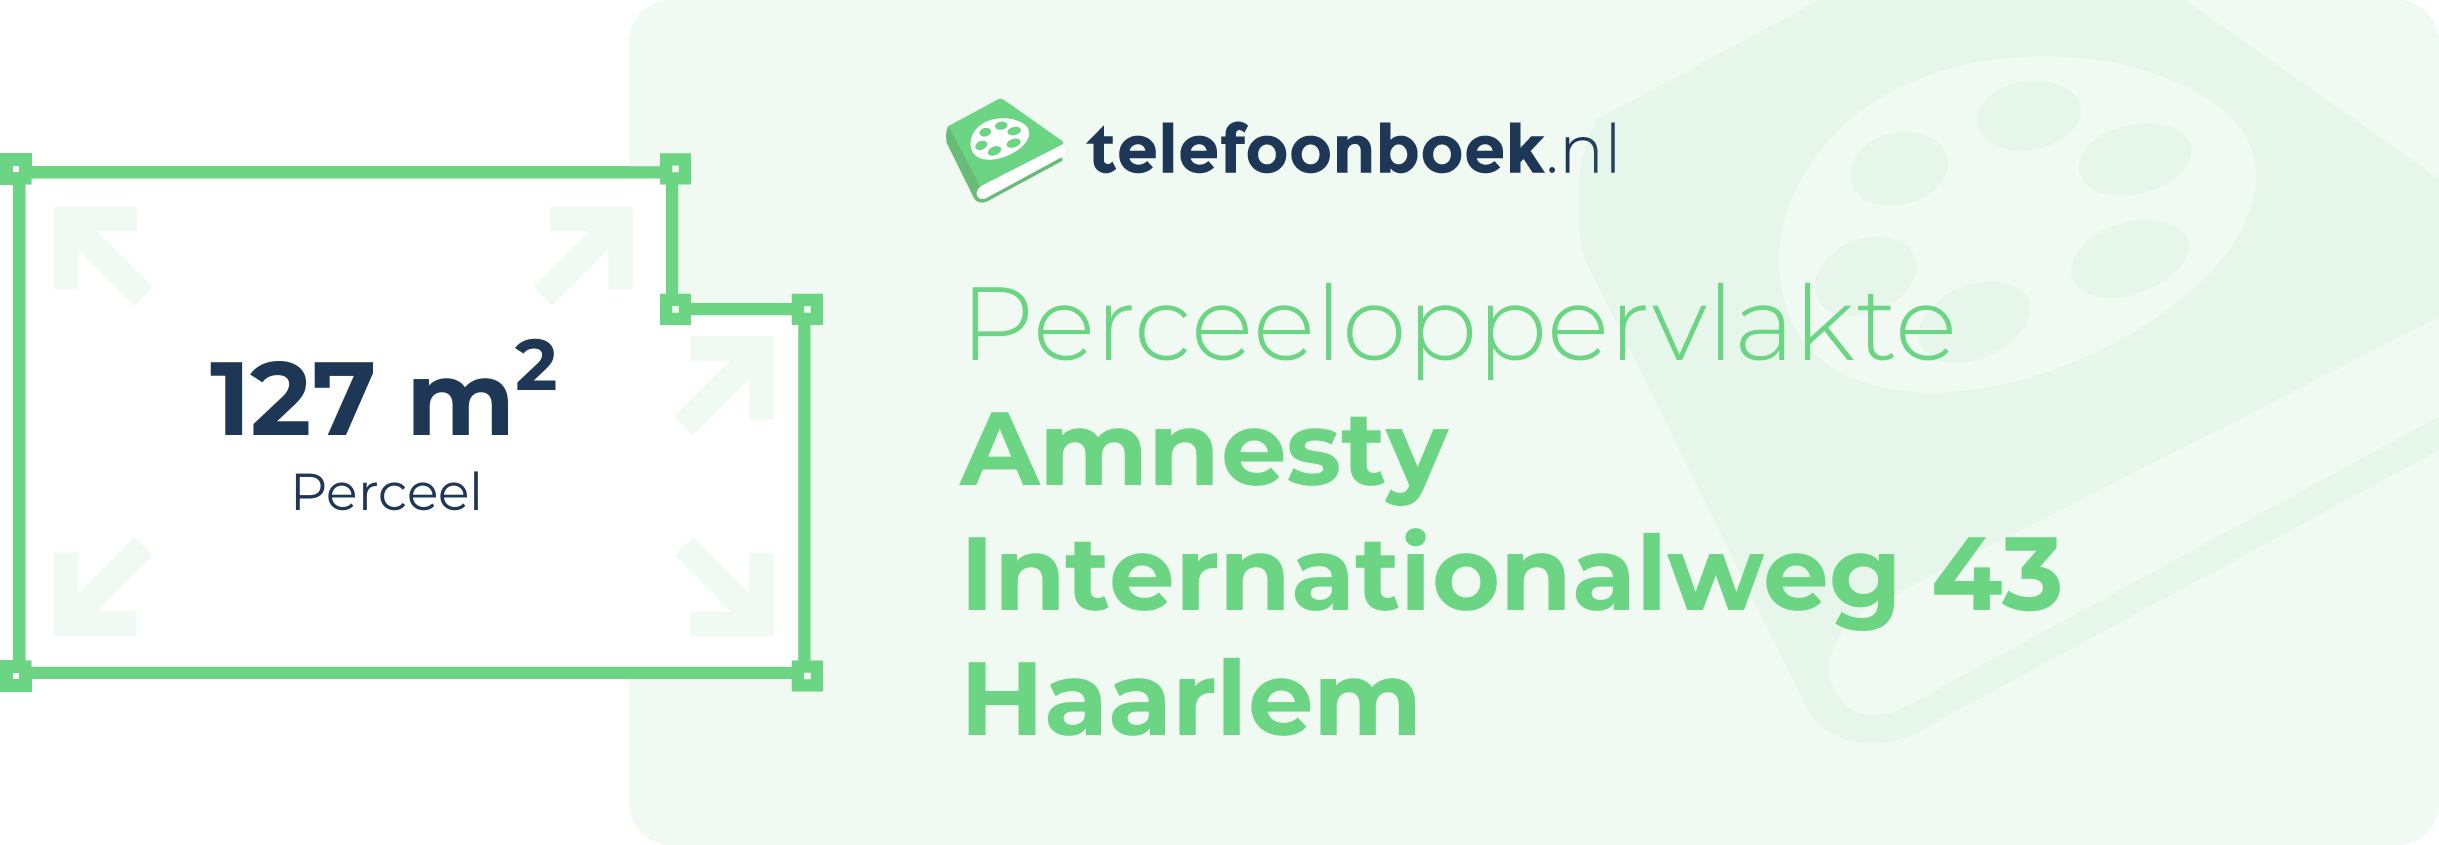 Perceeloppervlakte Amnesty Internationalweg 43 Haarlem